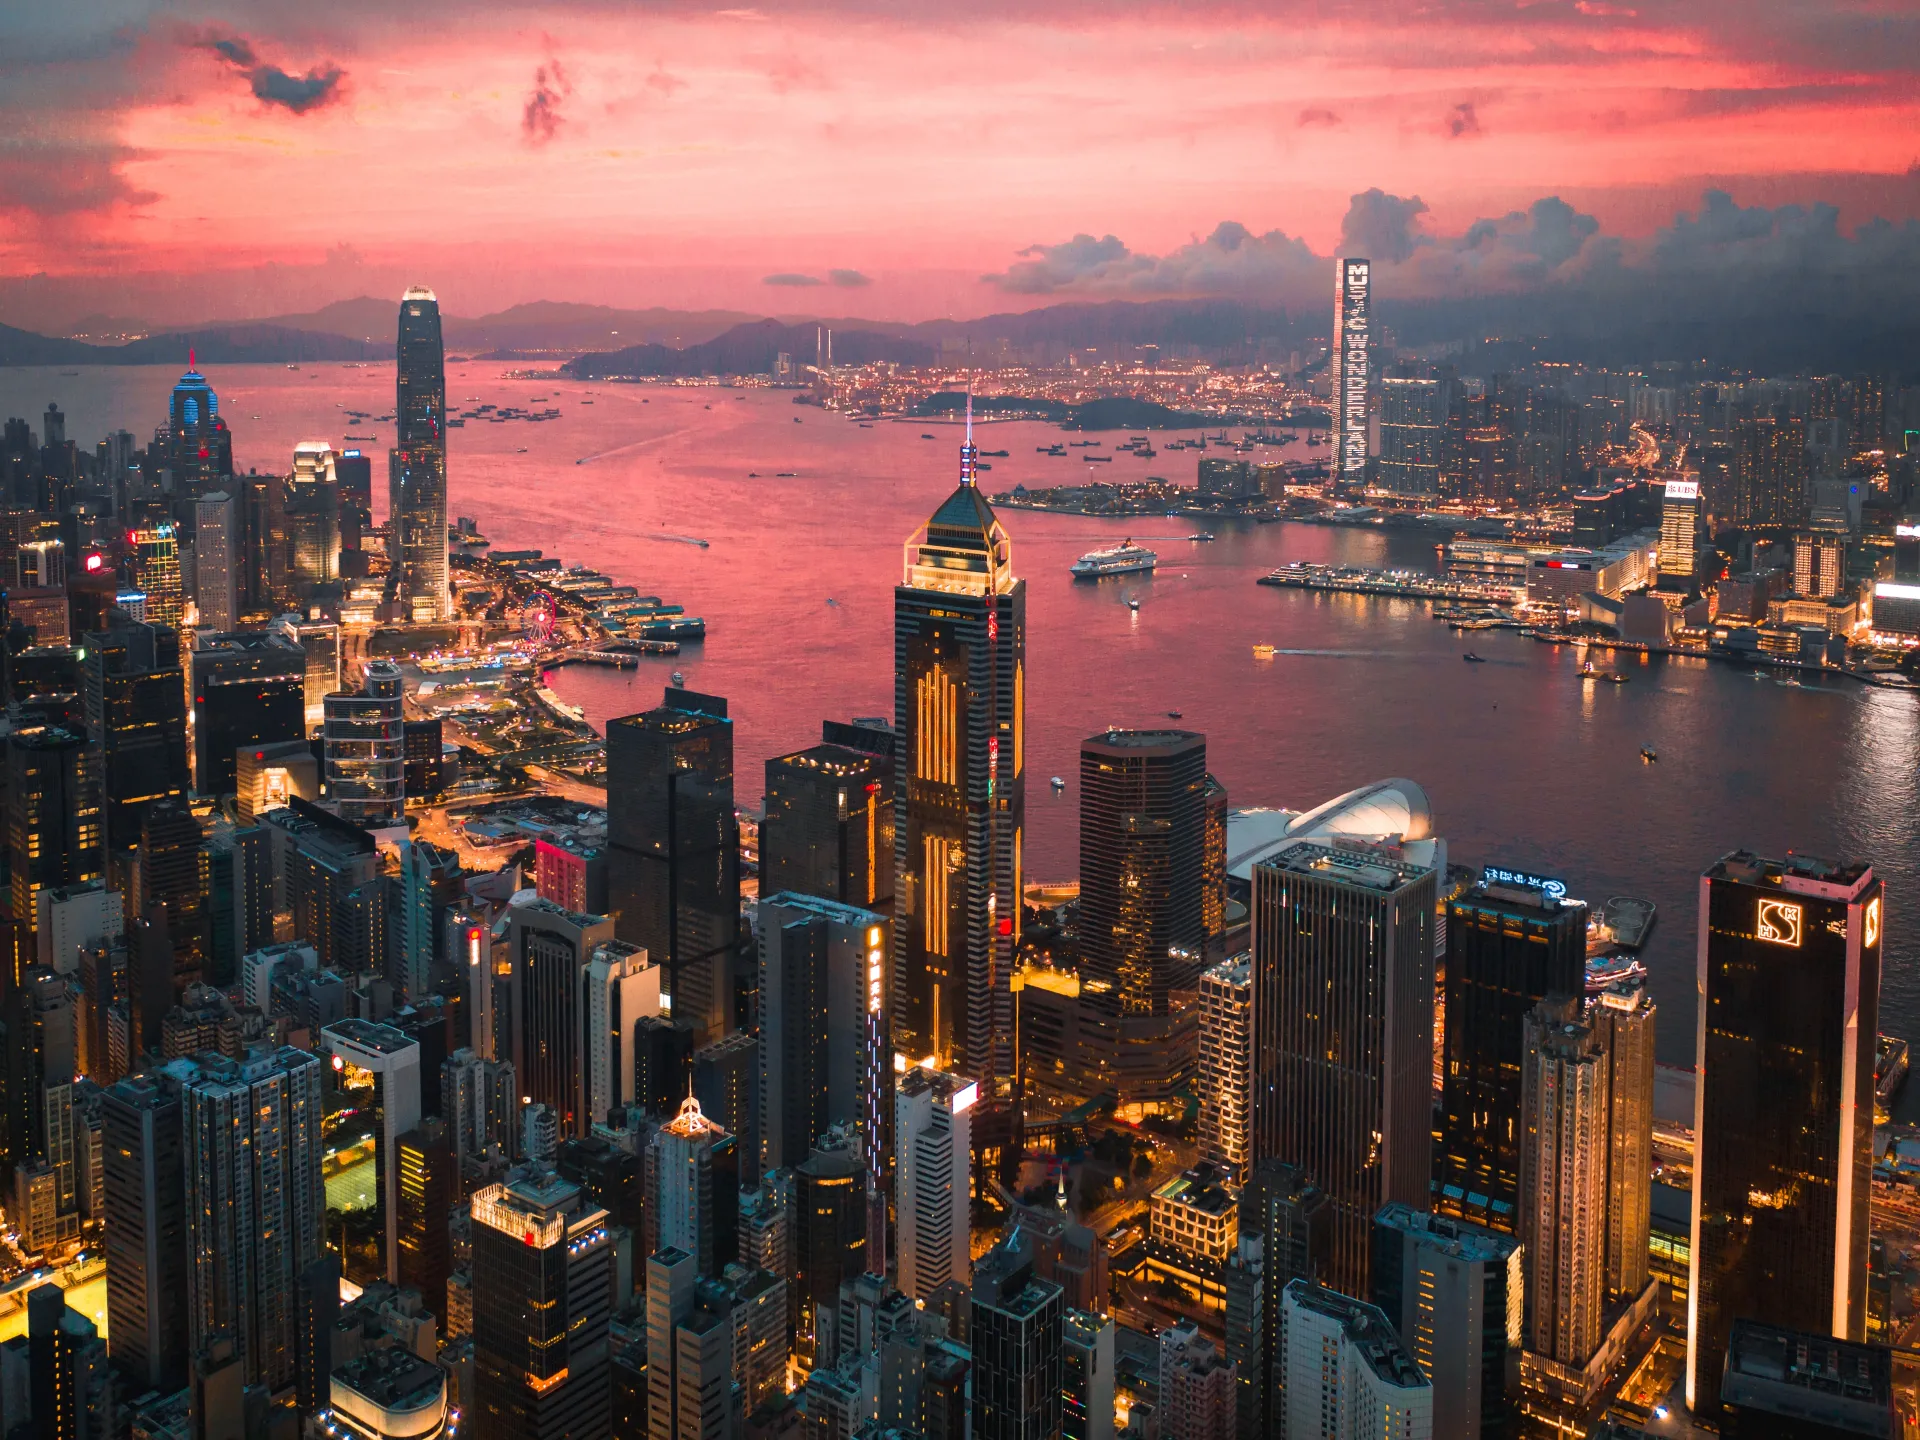 Photo of Hong Kong skyline by Manson Yim